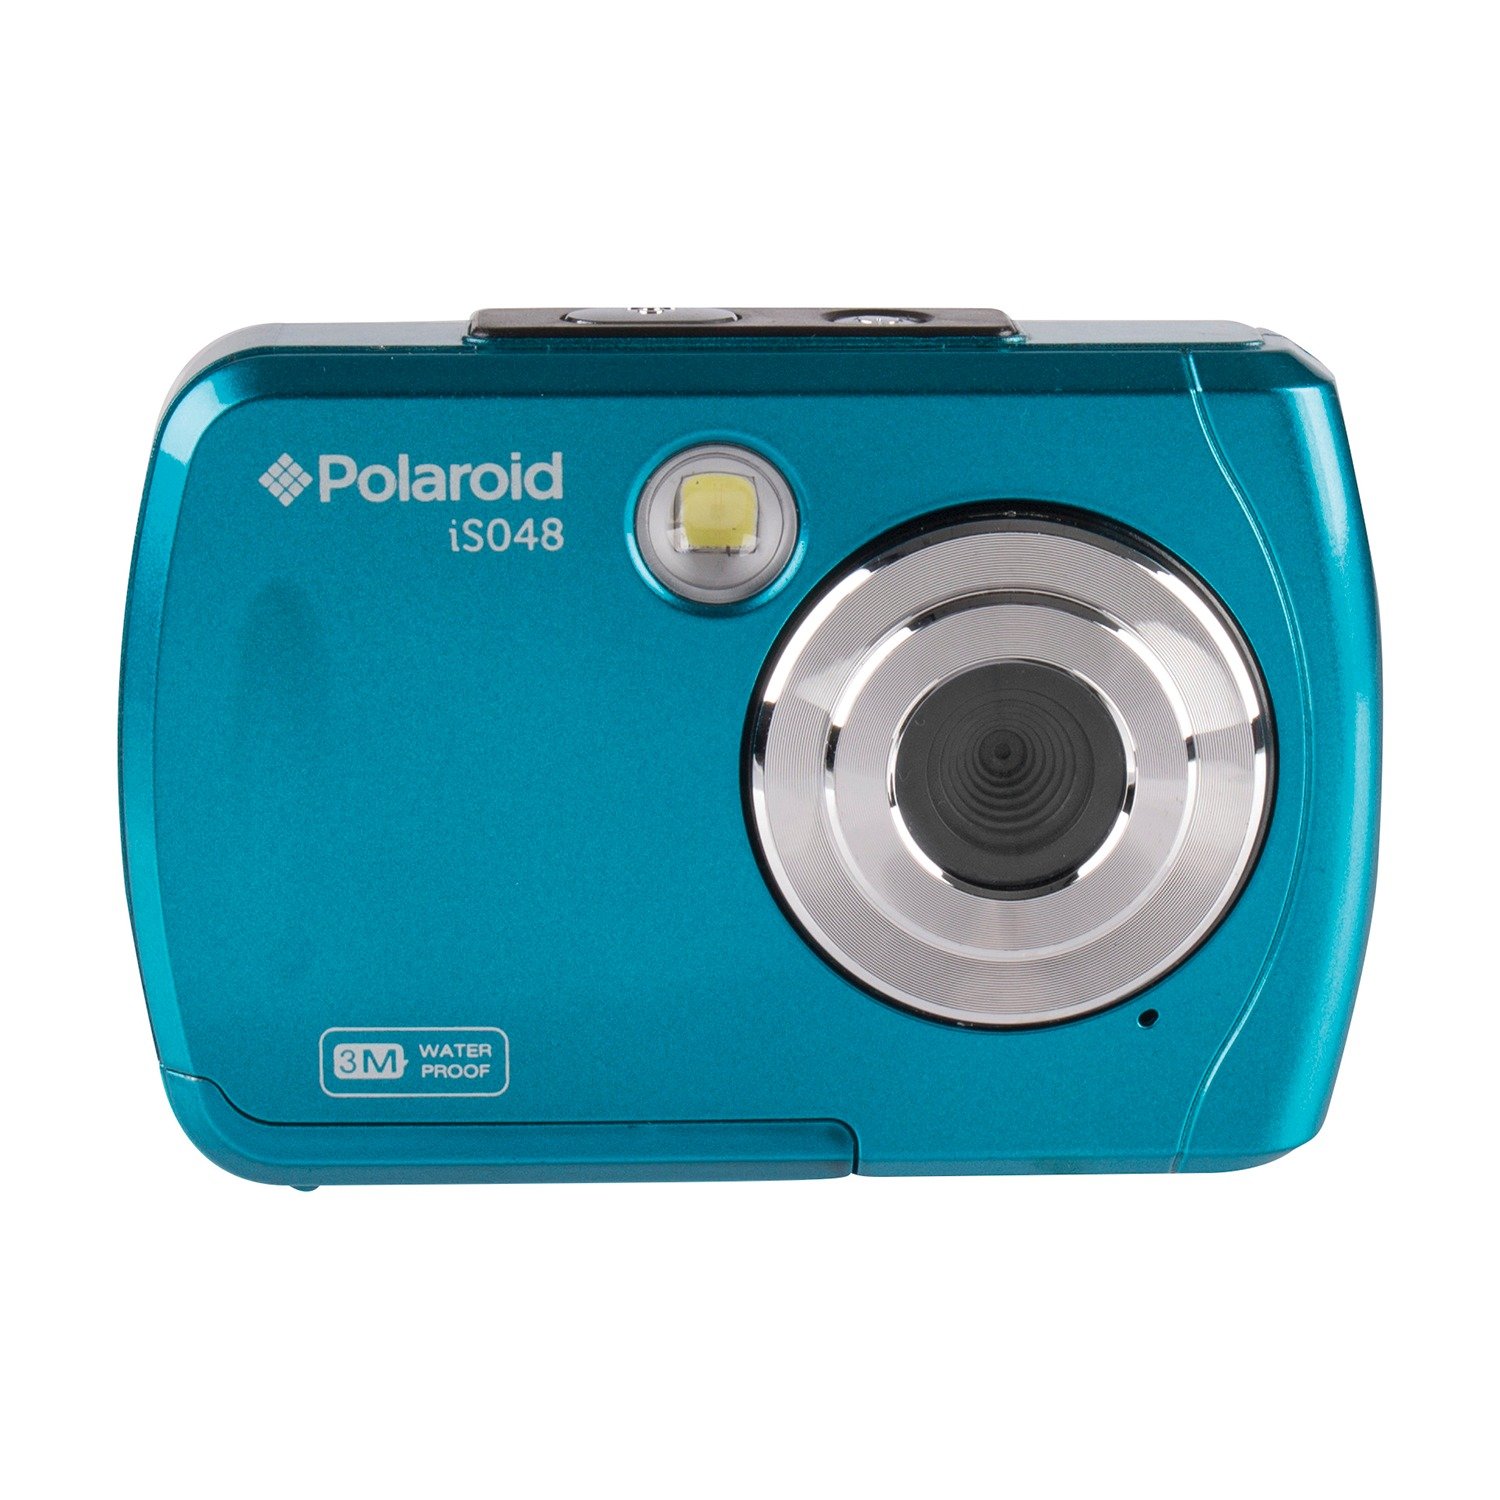 NABC - POLAROID IS048-TEAL 16.0 Megapixel Waterproof Instant Sharing Digital Camera